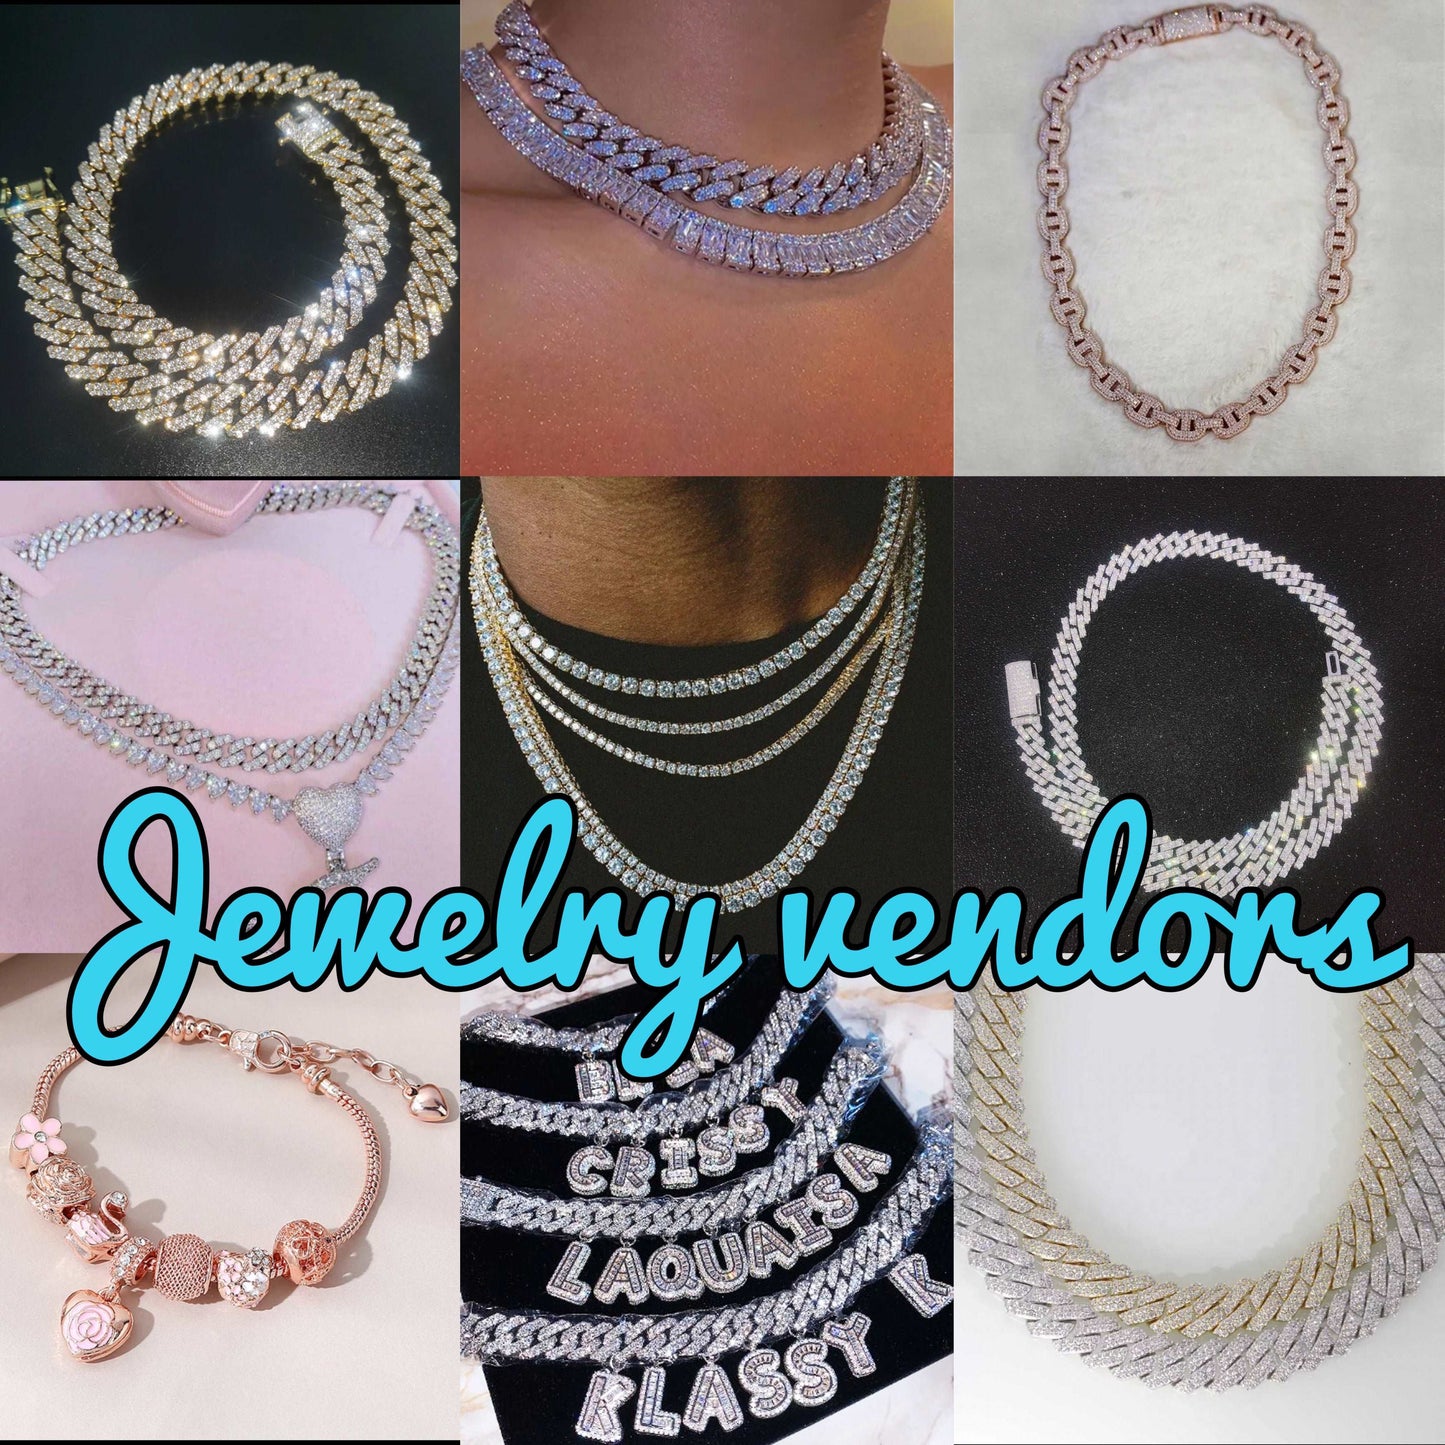 High Quality Jewelry Vendors